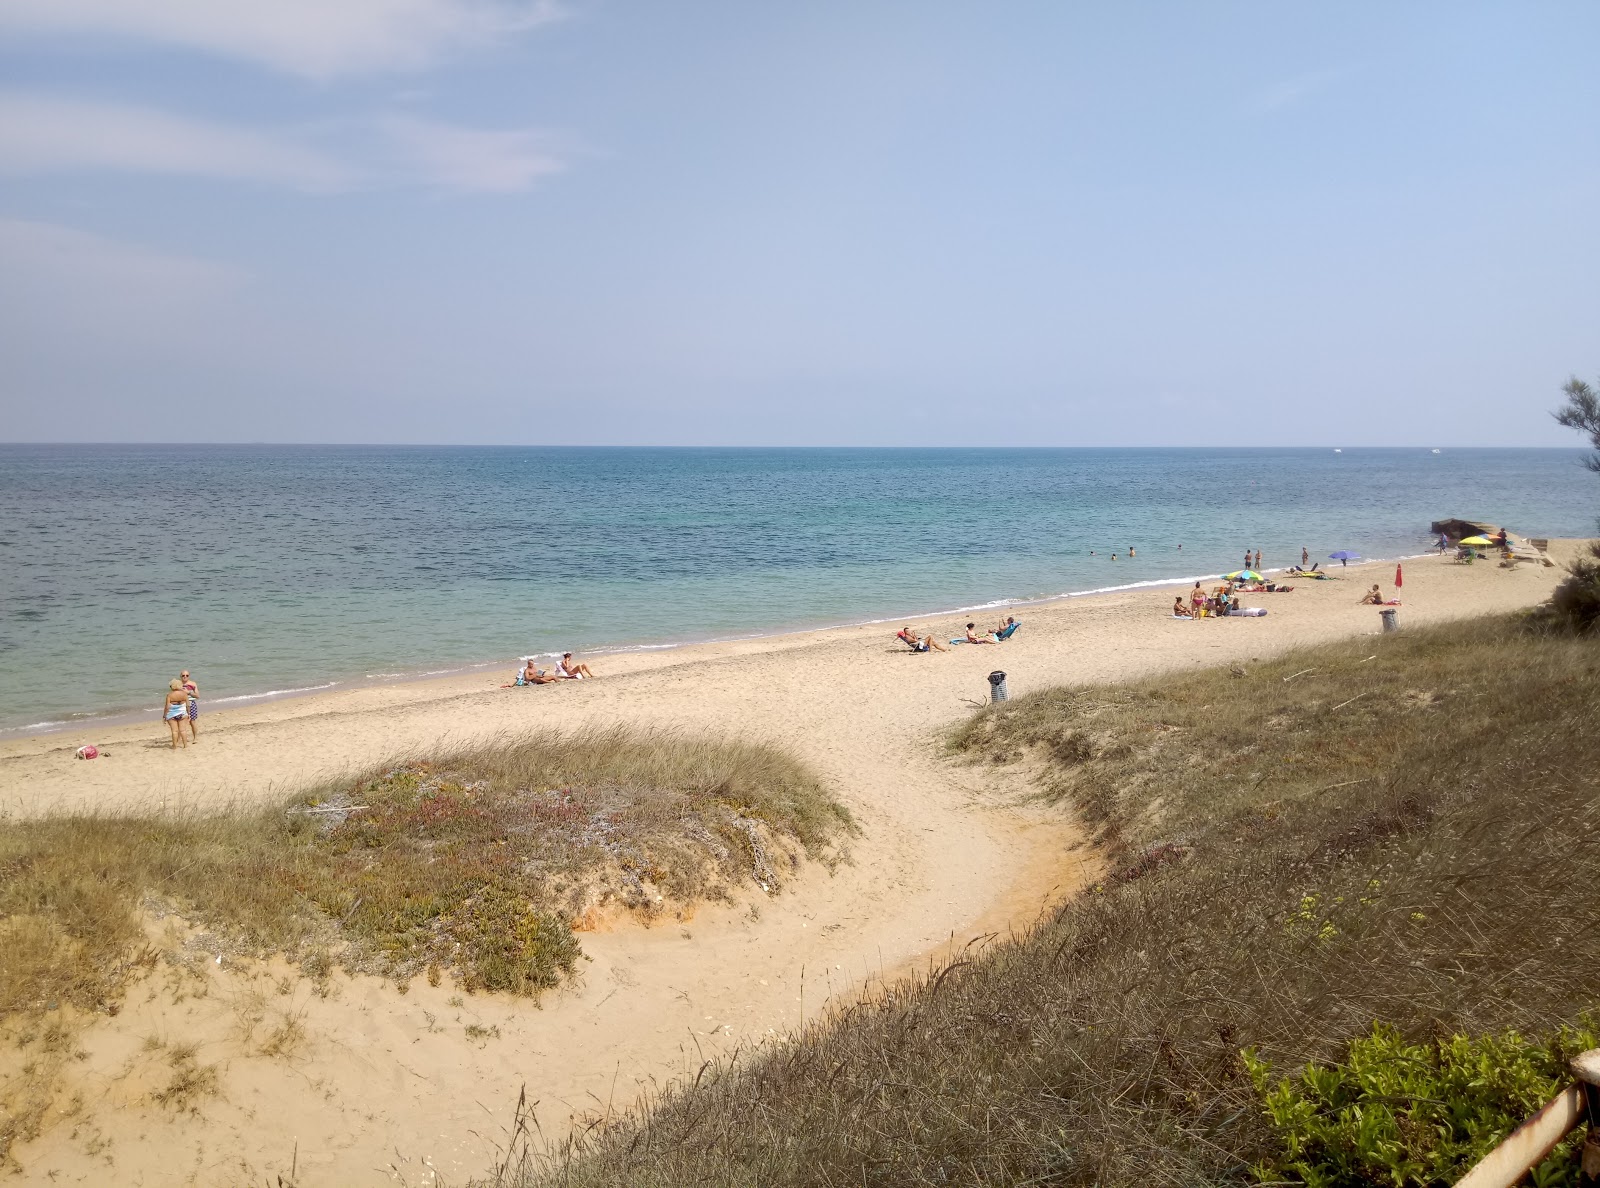 Spiaggia di Sciaia'in fotoğrafı parlak kum yüzey ile